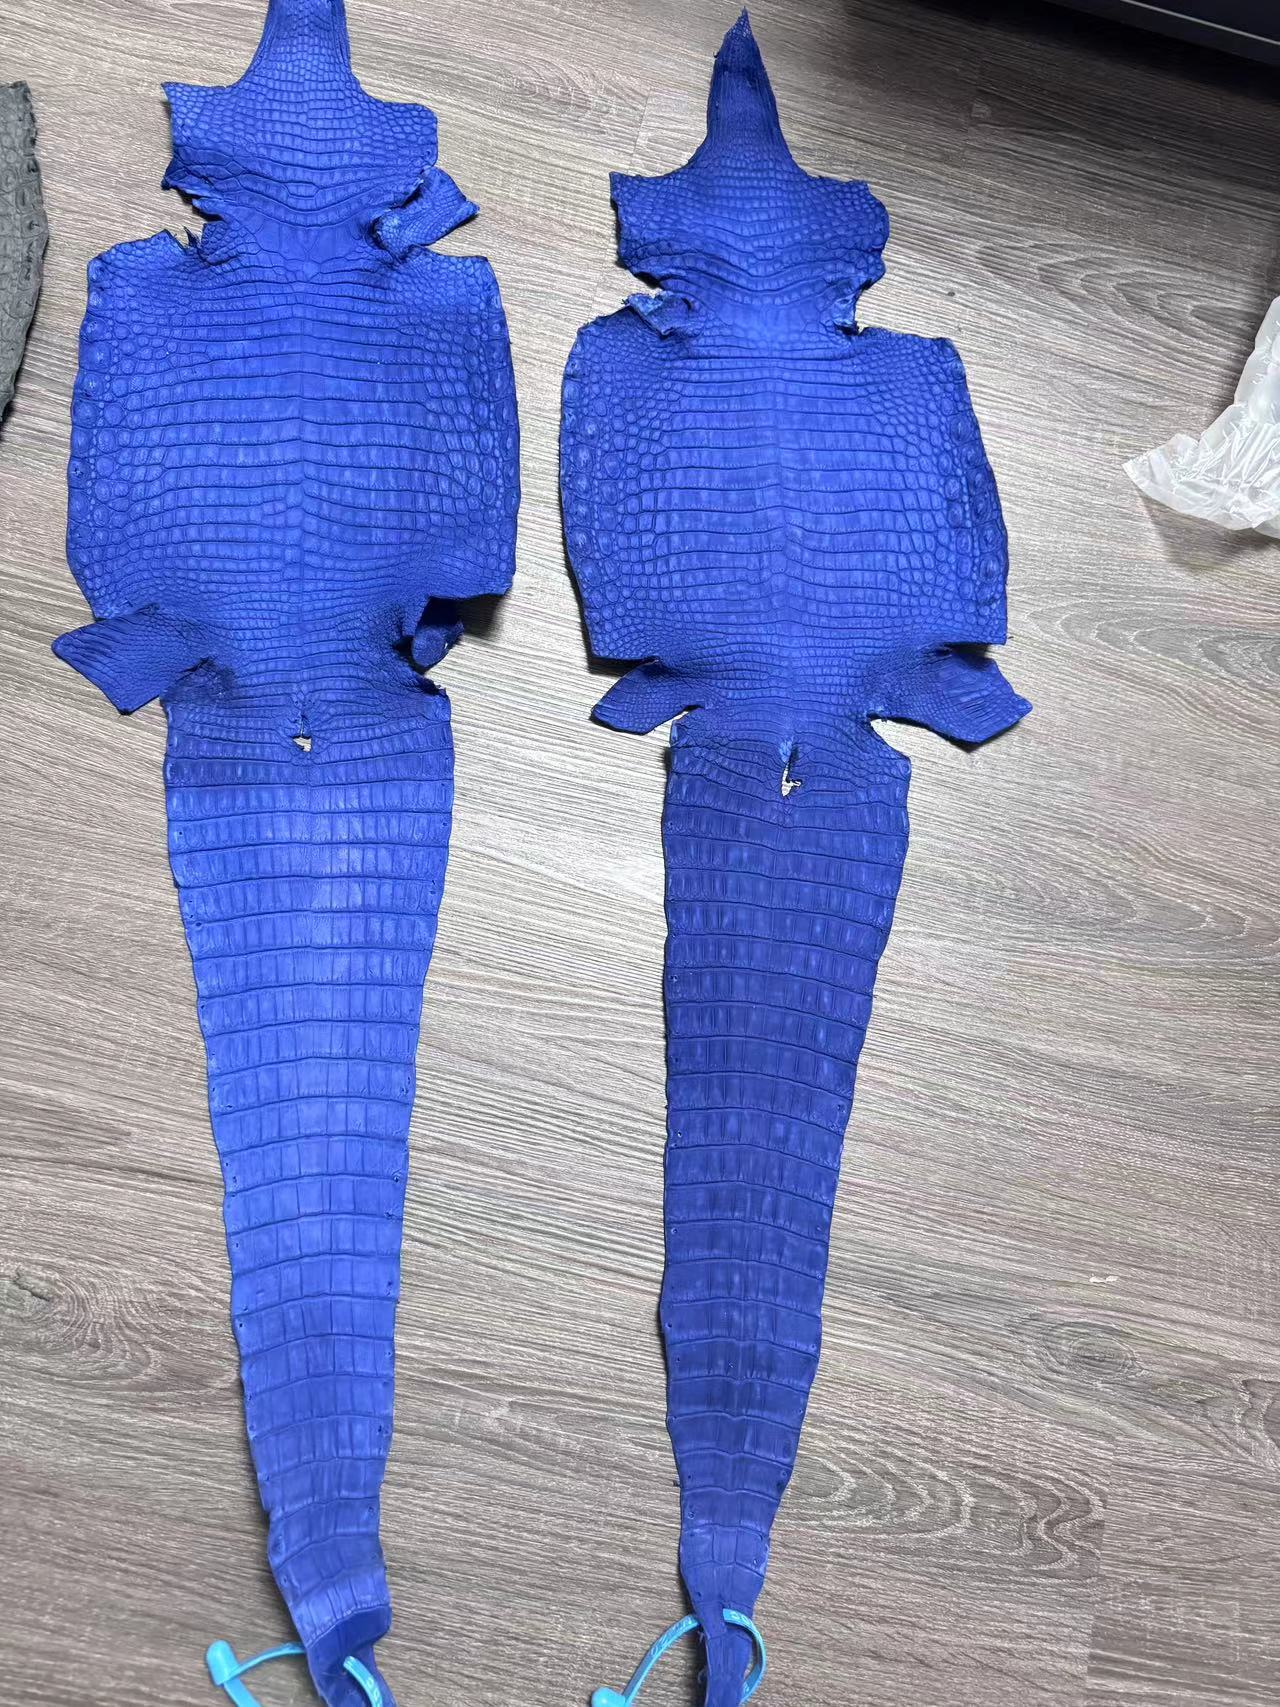 Nubuck Nile Crocodile - Special Colors (Blue, Grey) - Sunny Exotic Leathers